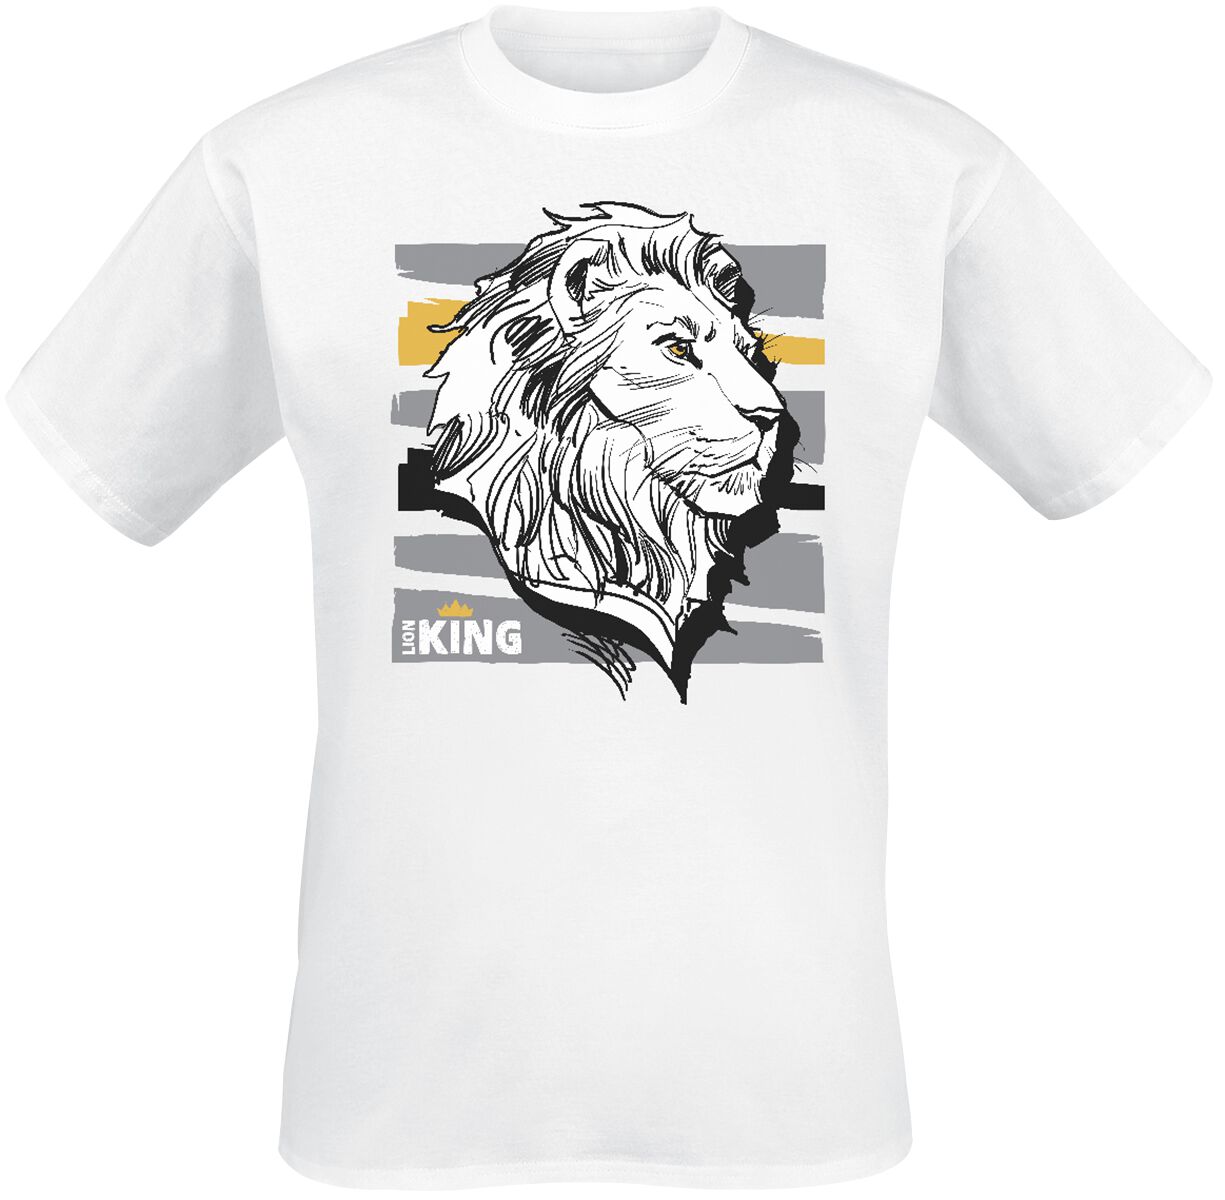 The Lion King Mufasa - The King T-Shirt white